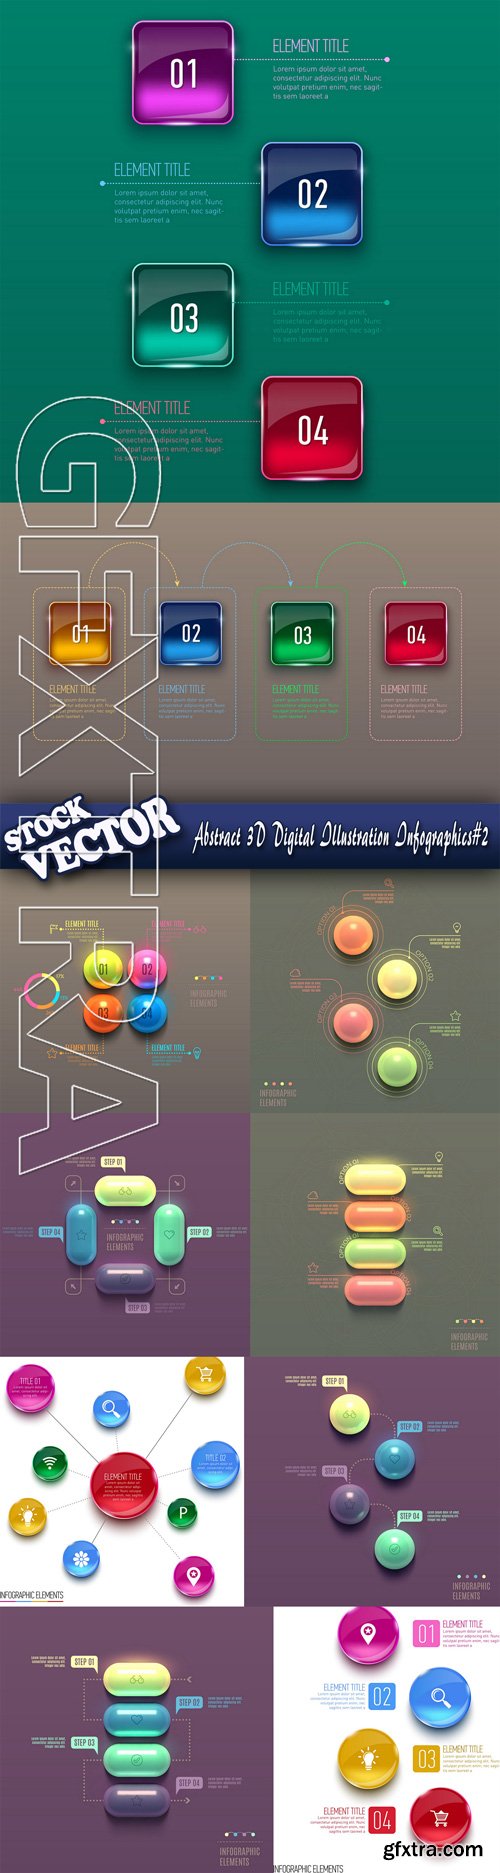 Stock Vector - Abstract 3D Digital Illustration Infographics#2